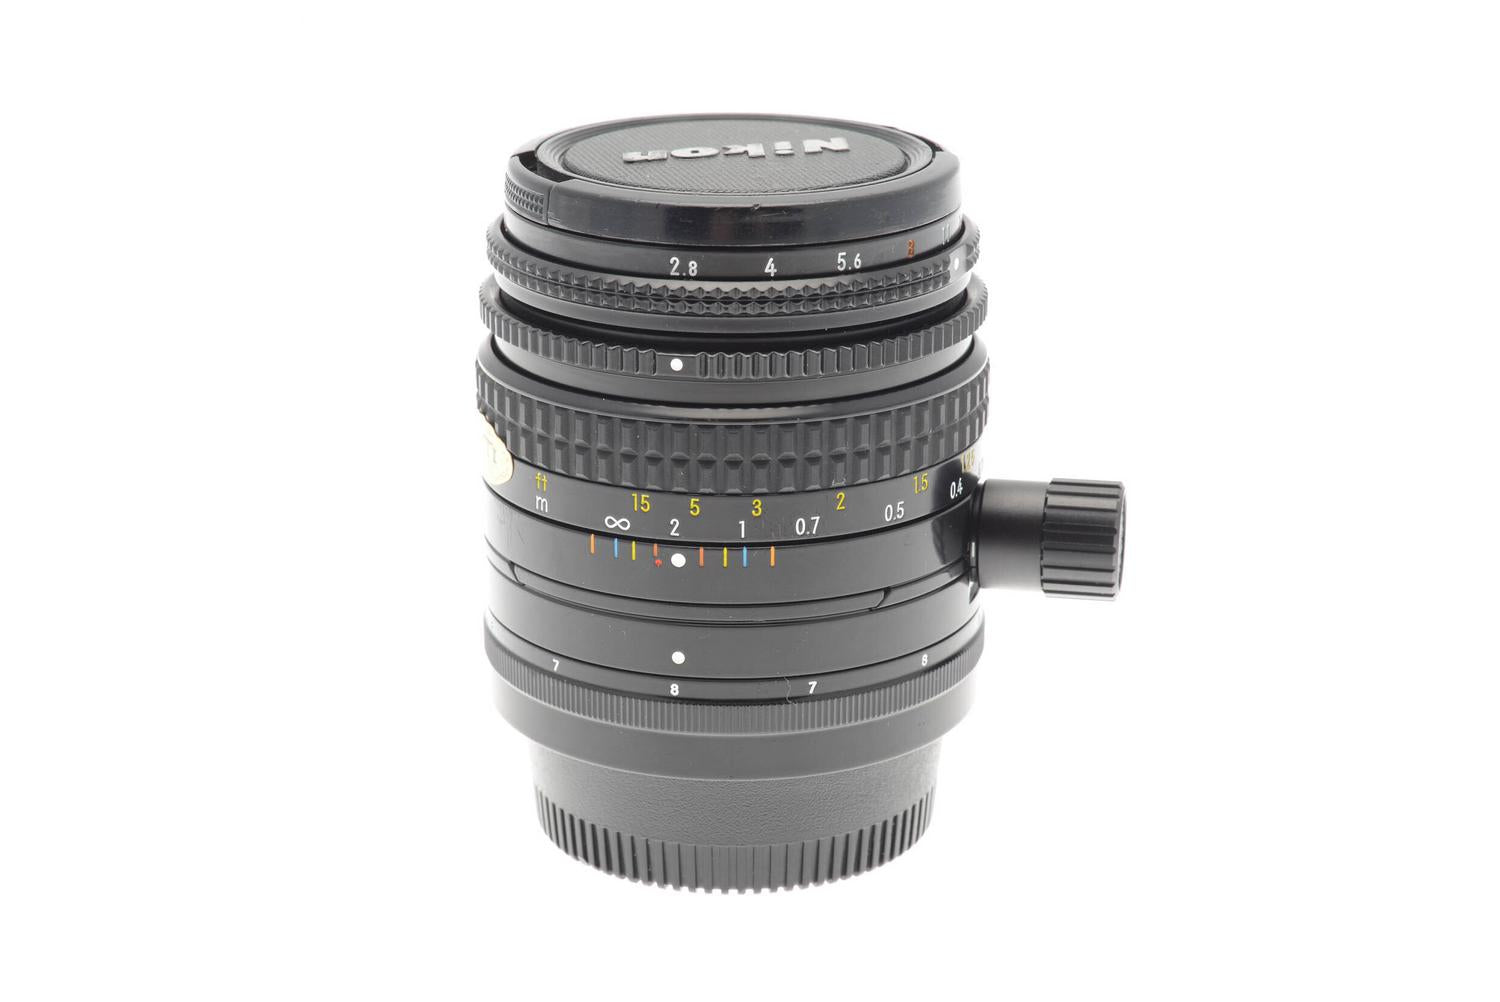 Nikon 35mm f2.8 PC-Nikkor - Lens